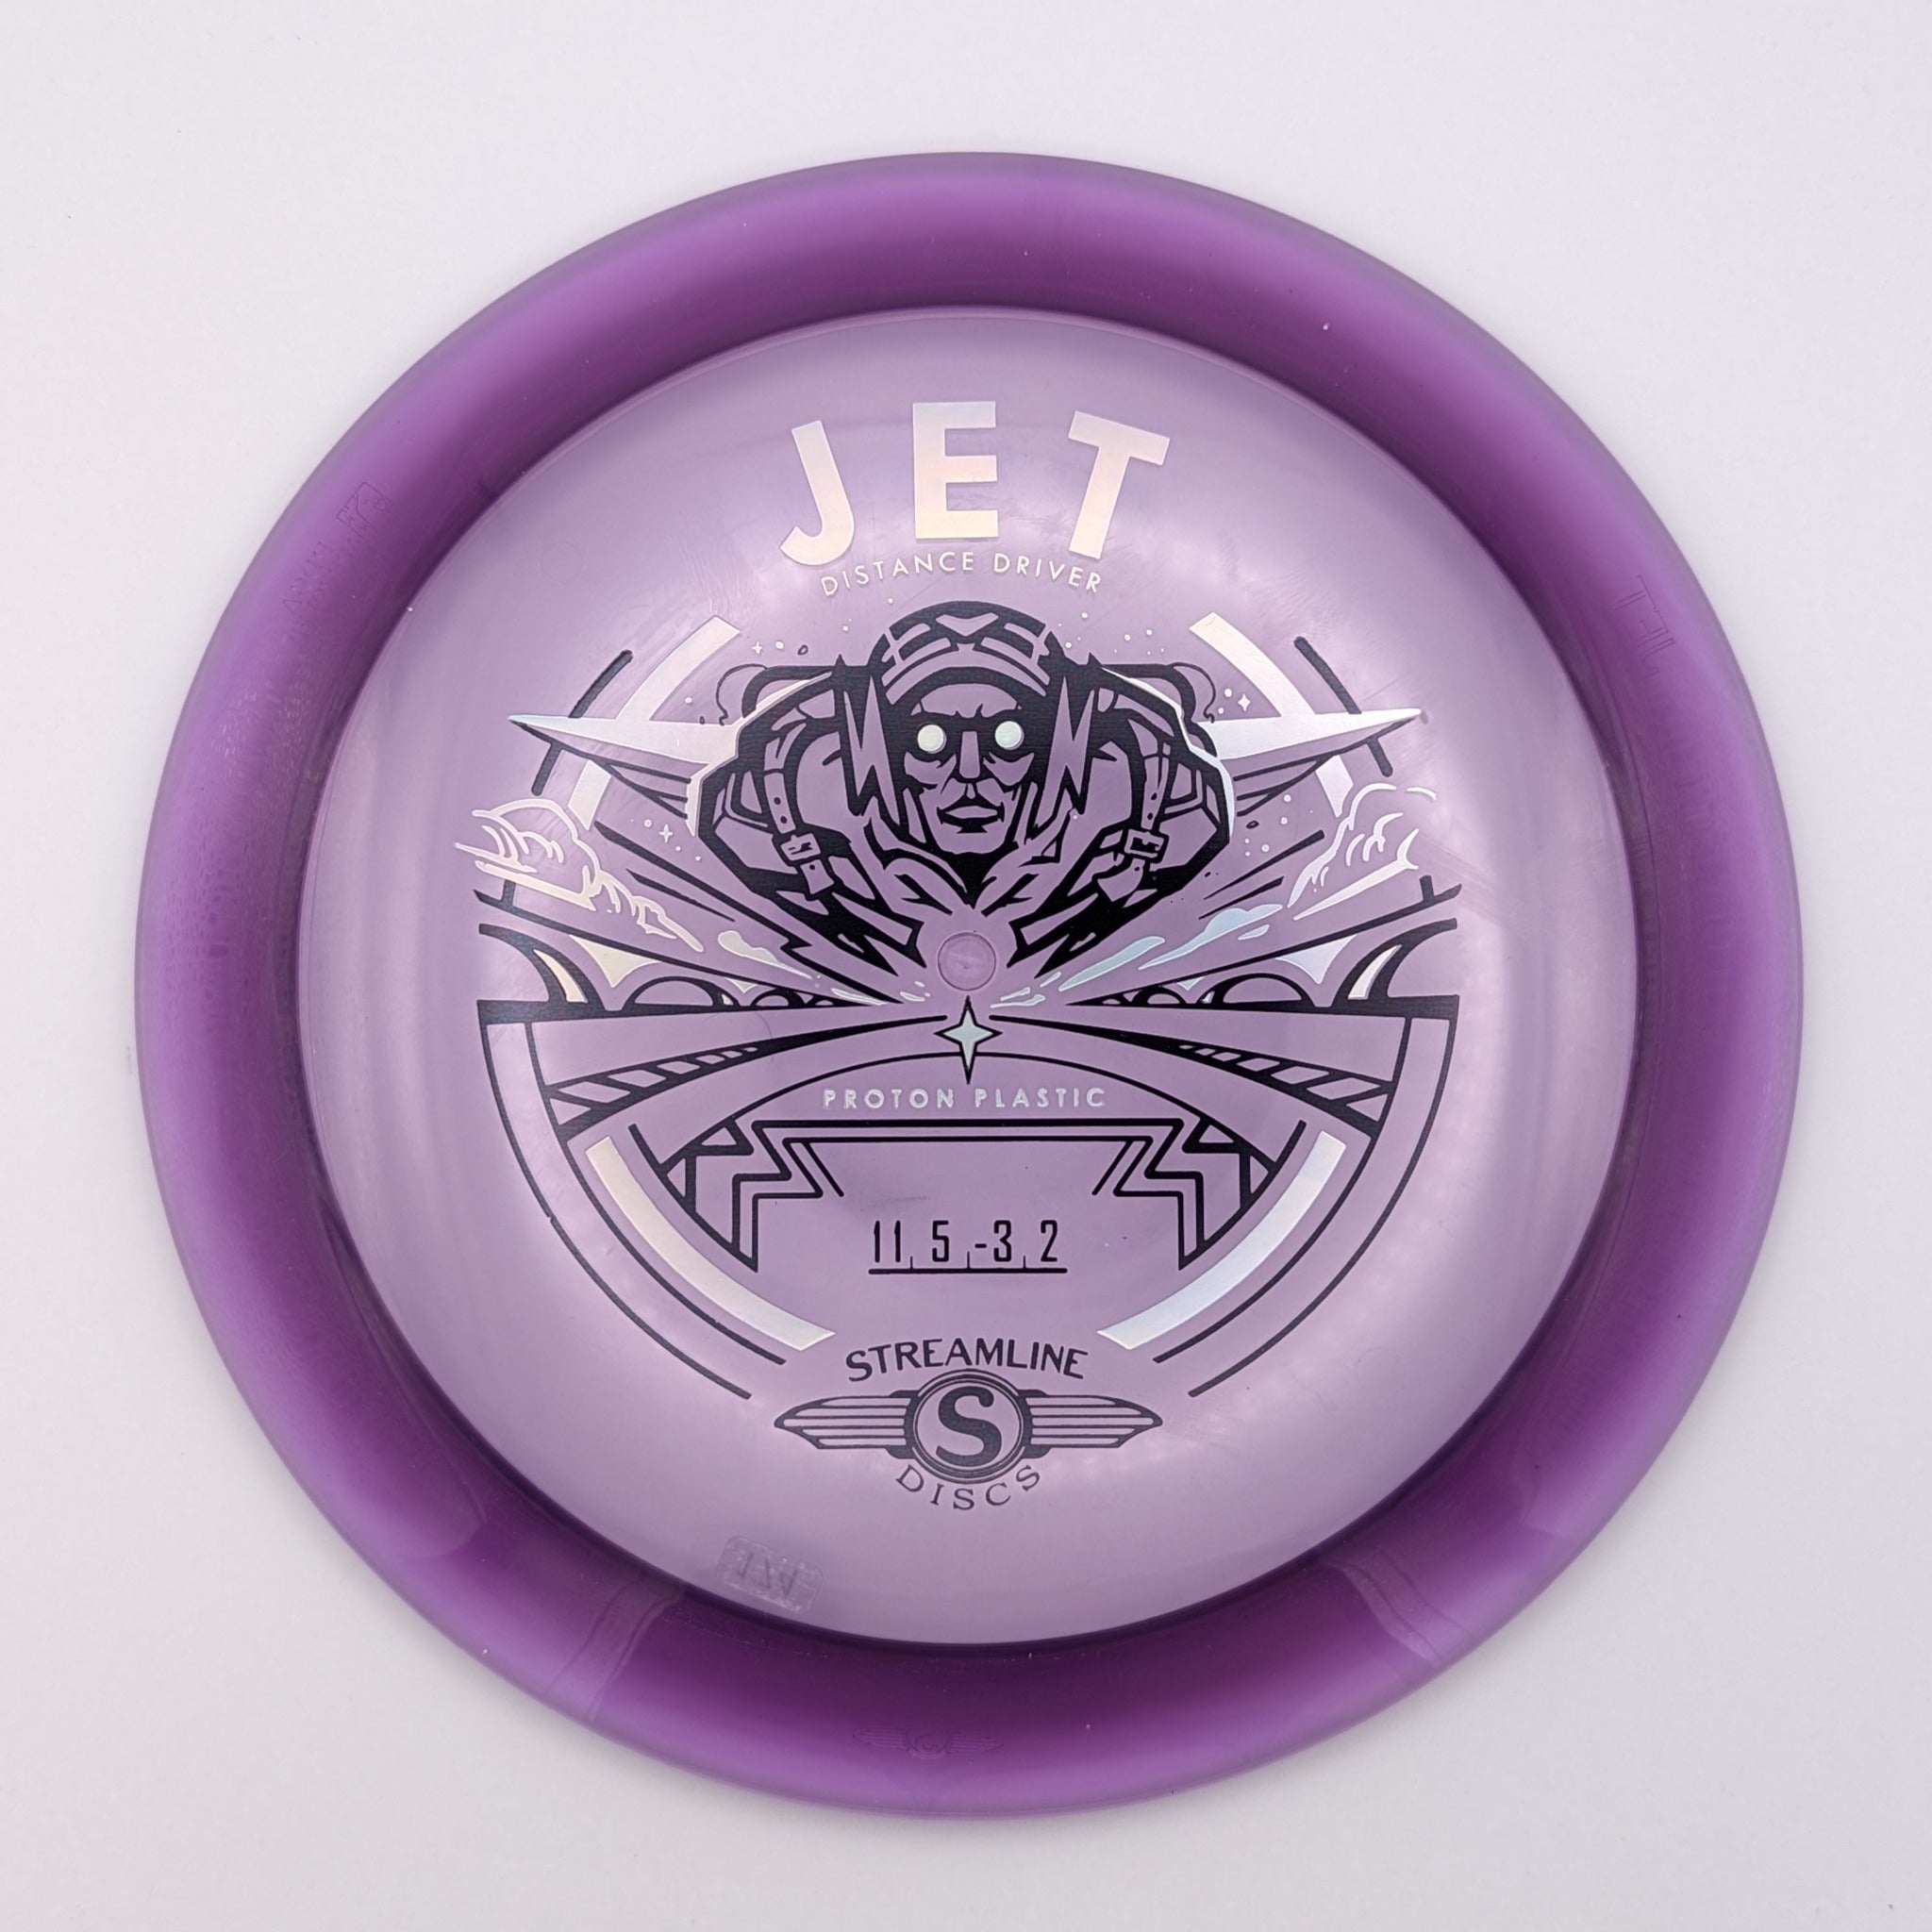 STREAMLINE Distance Driver Jet Proton Plastic Purple